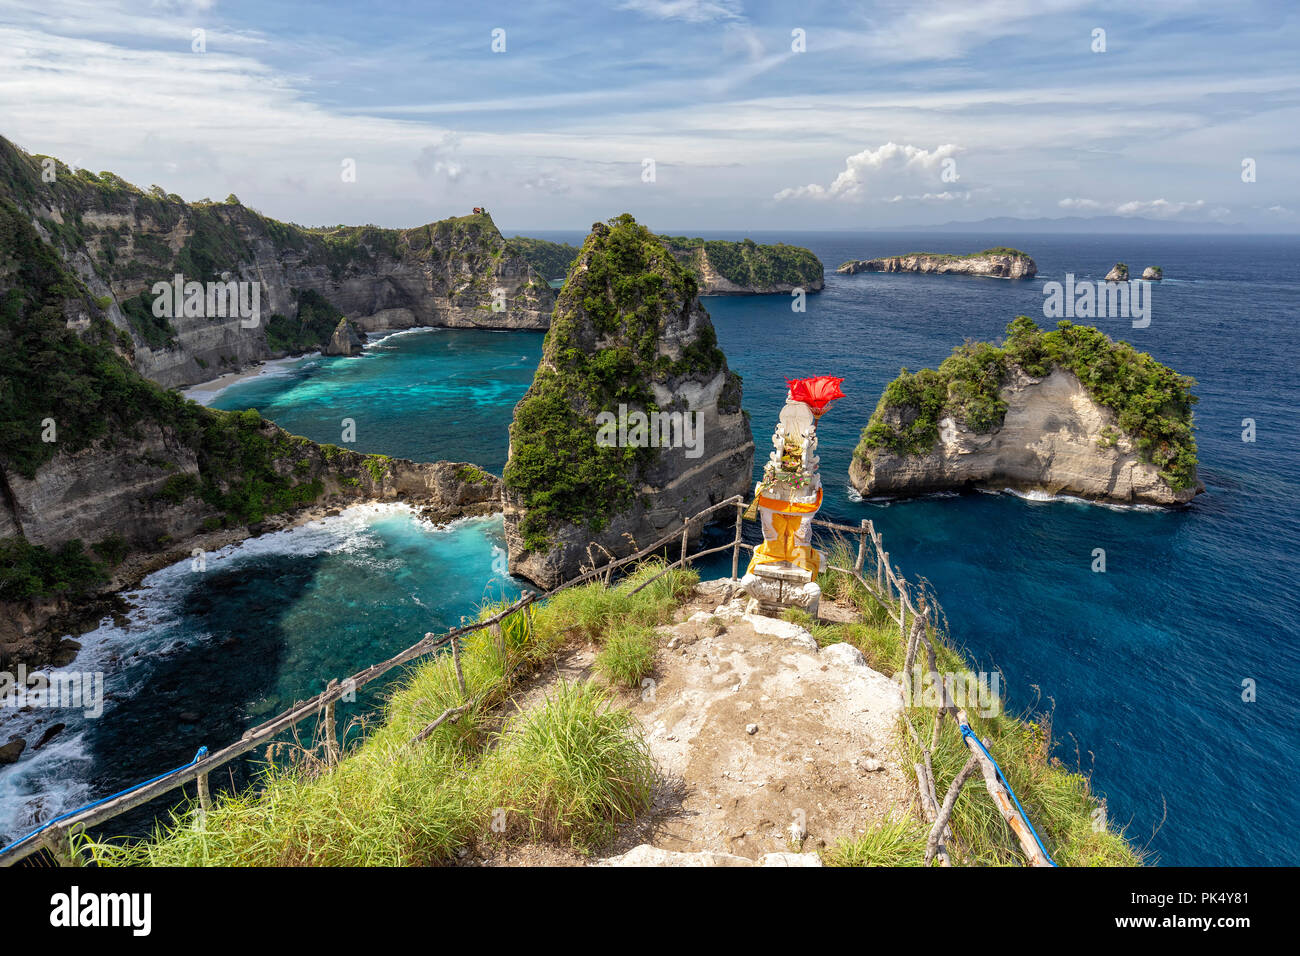 Rugged and beautiful coastline on a small part of Nusa Penida, a small island near Bali. Stock Photo